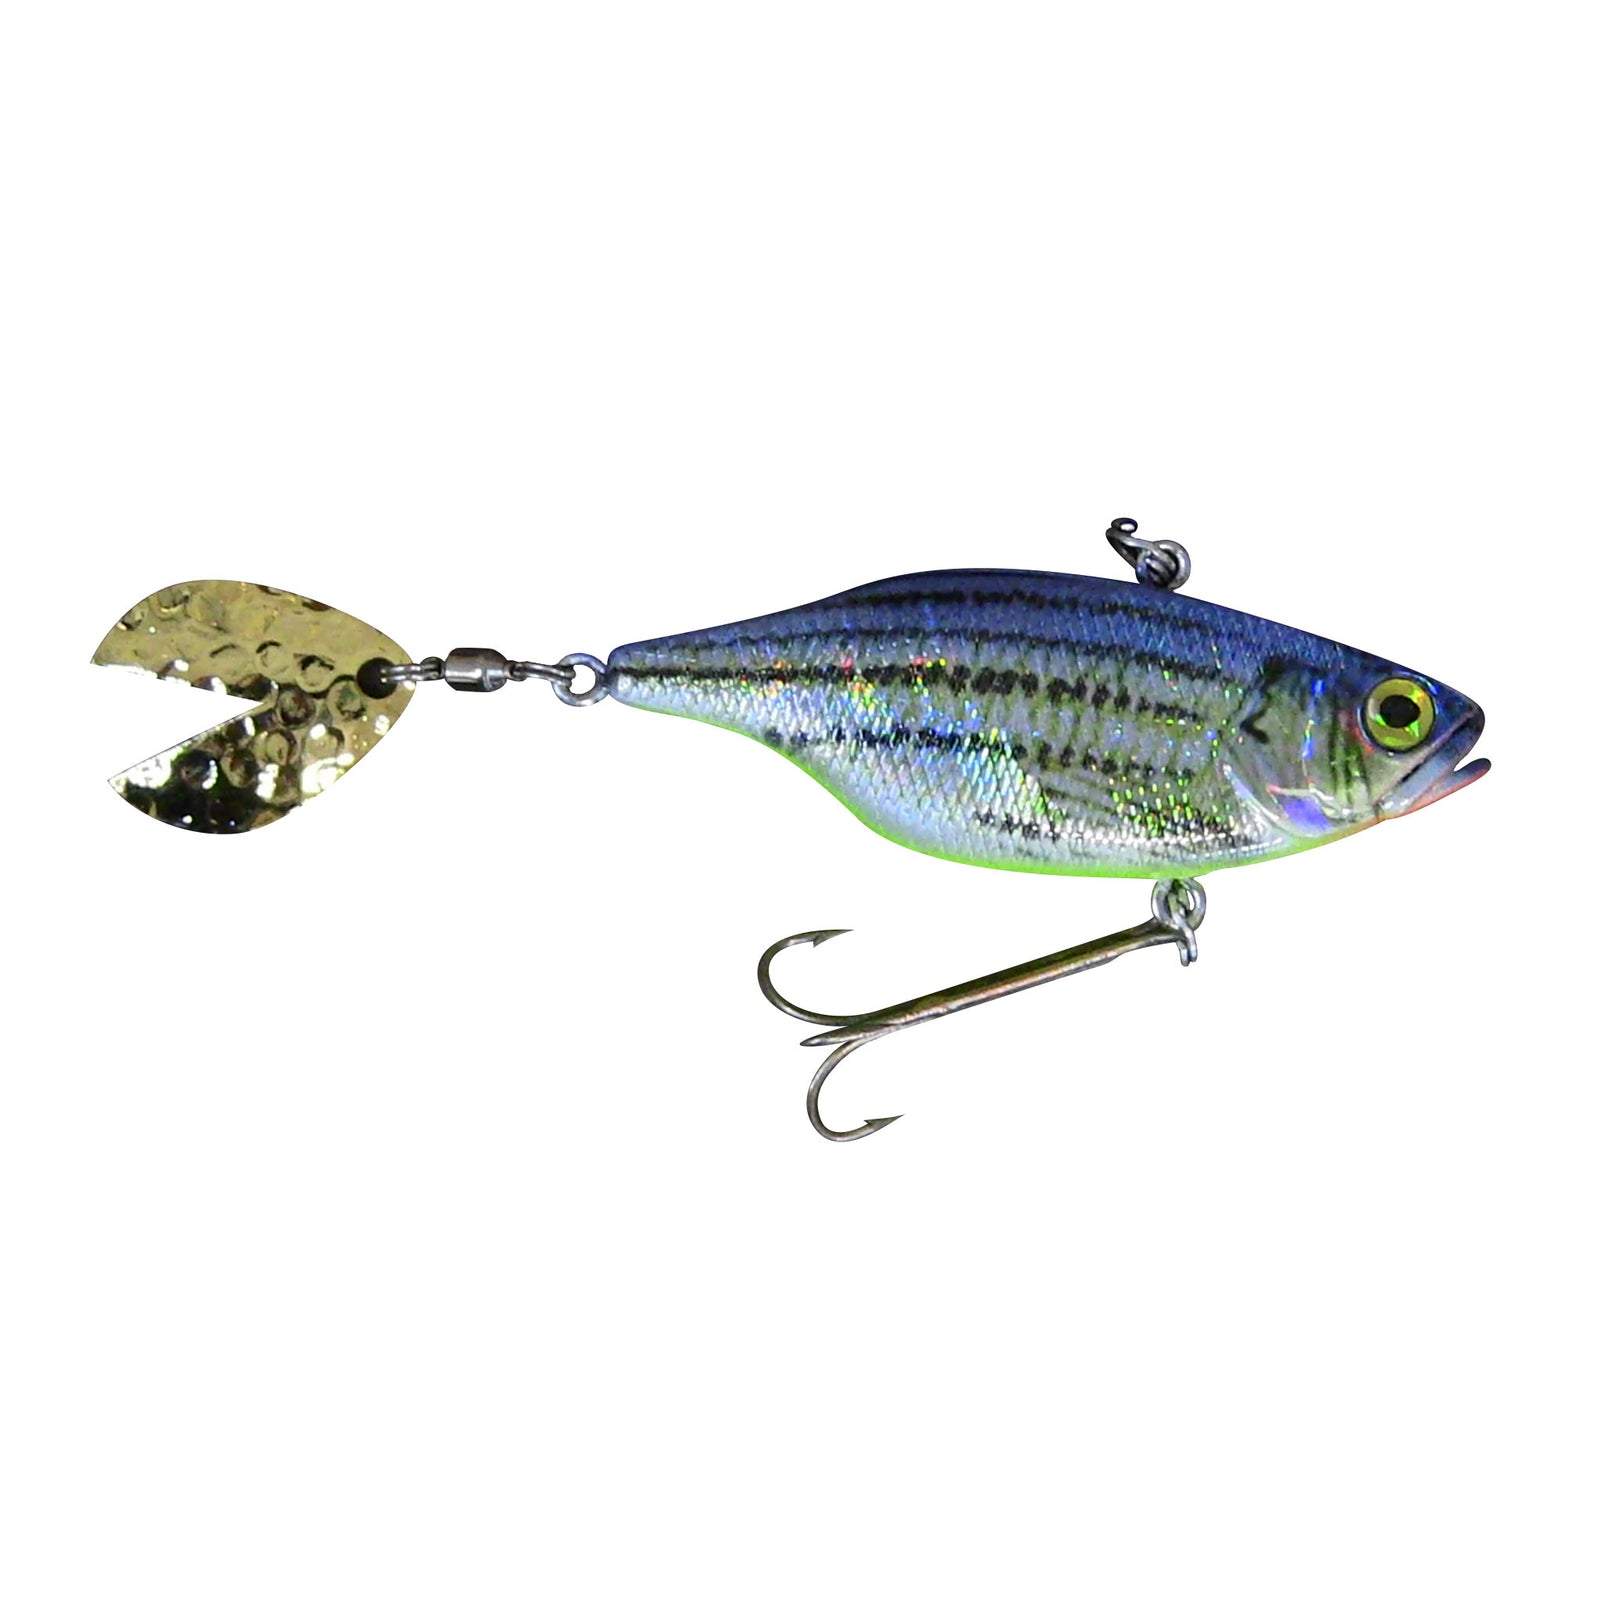 lipless Crankbait Bass Fishing Lures - Crankbaits for Bass Lure - Crank  Bait Rattle Fishing Lures - Lipless Fishing Lures - Bass, Walleye  crankbaits